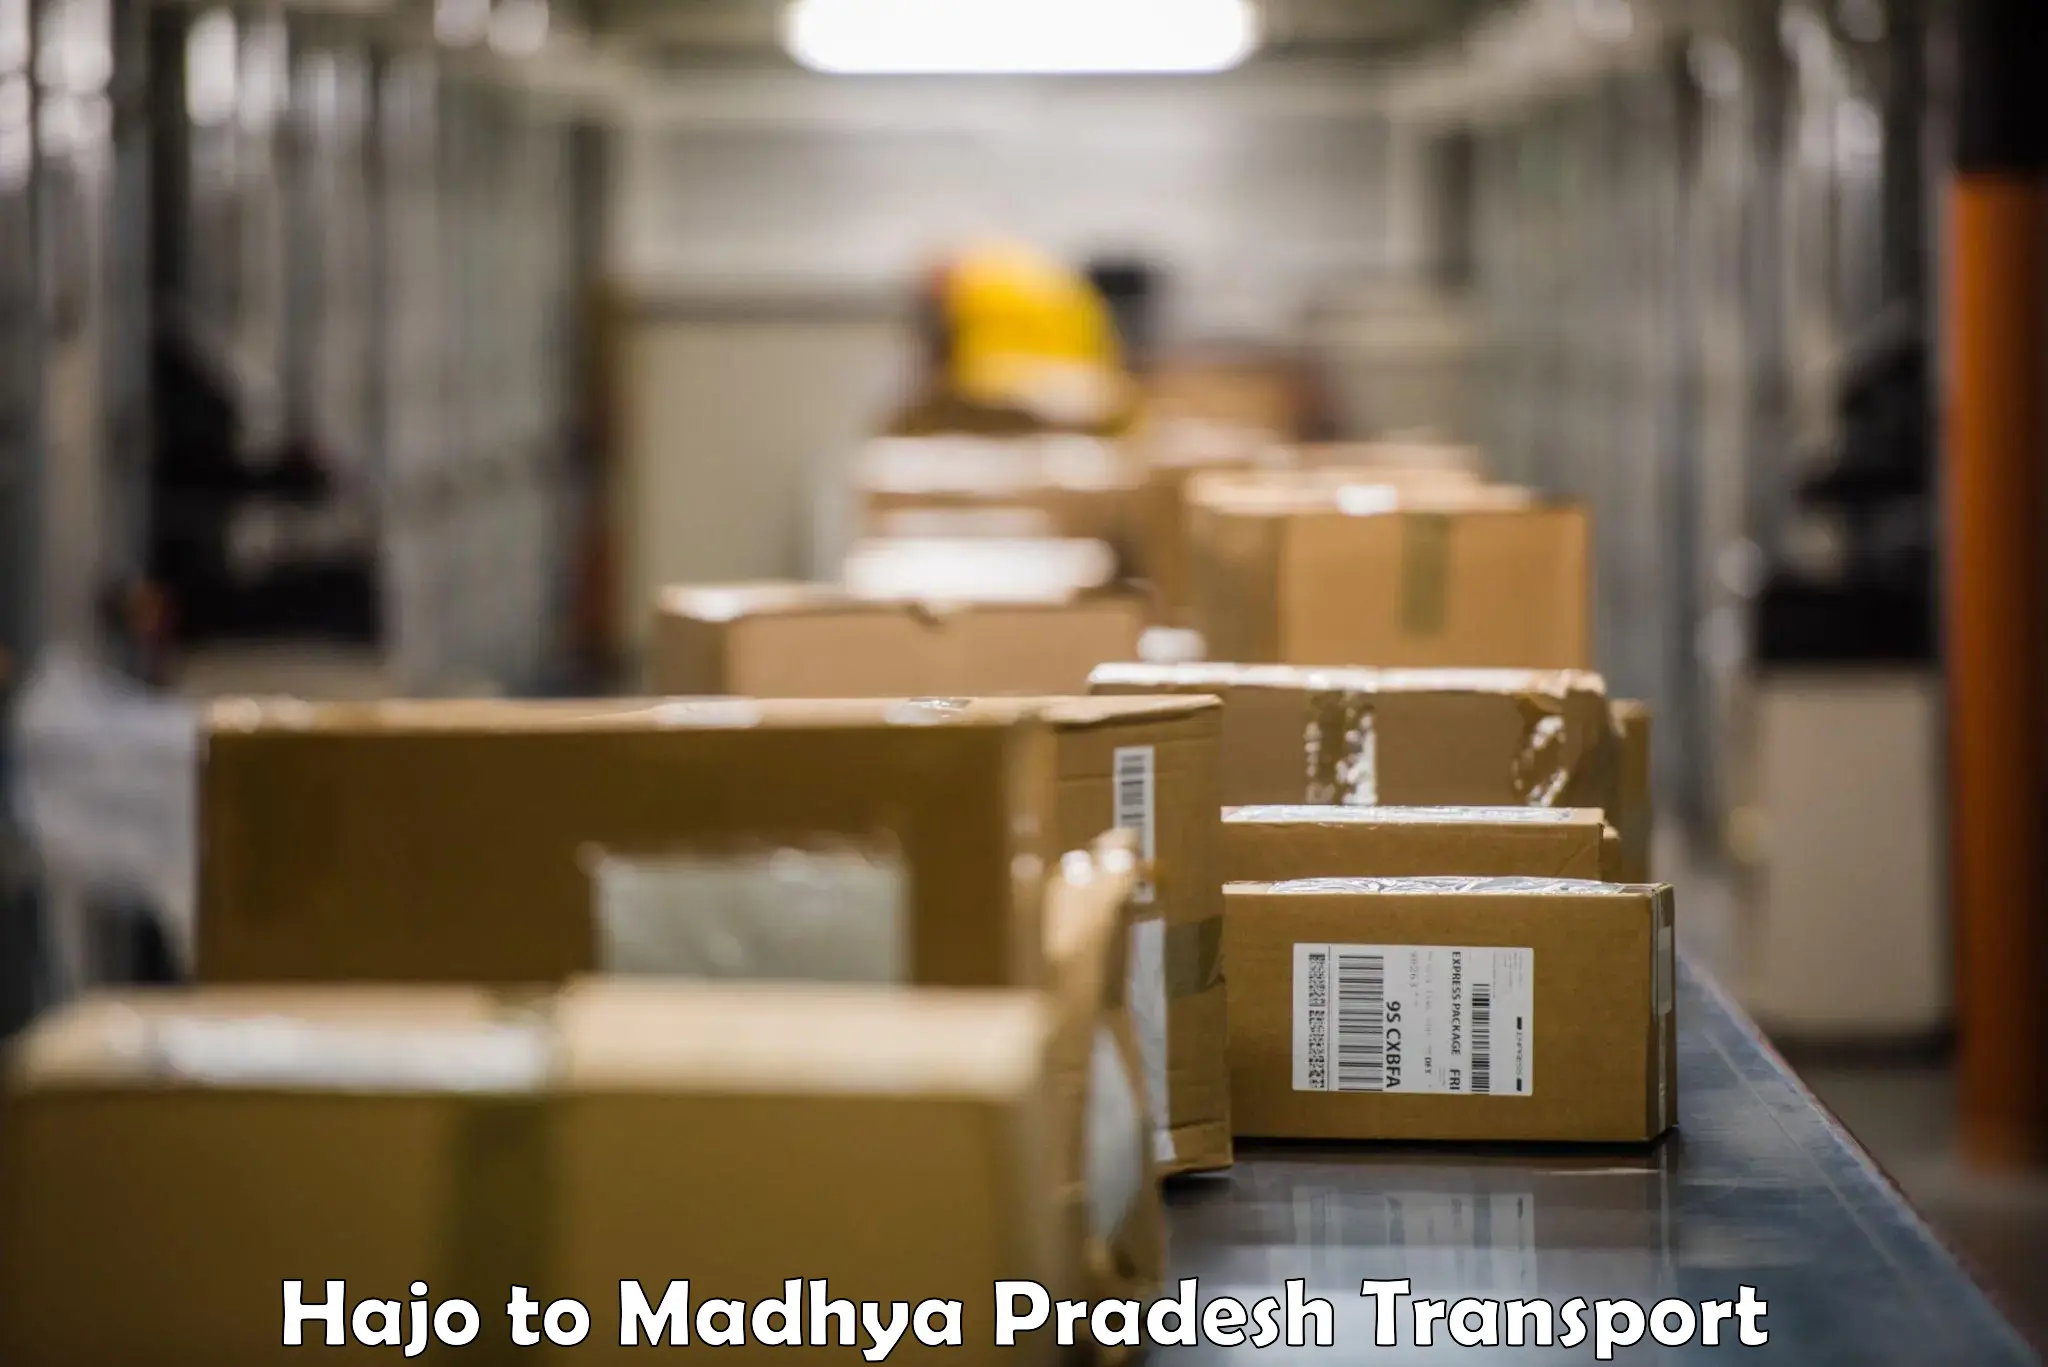 Transport in sharing Hajo to IIIT Bhopal